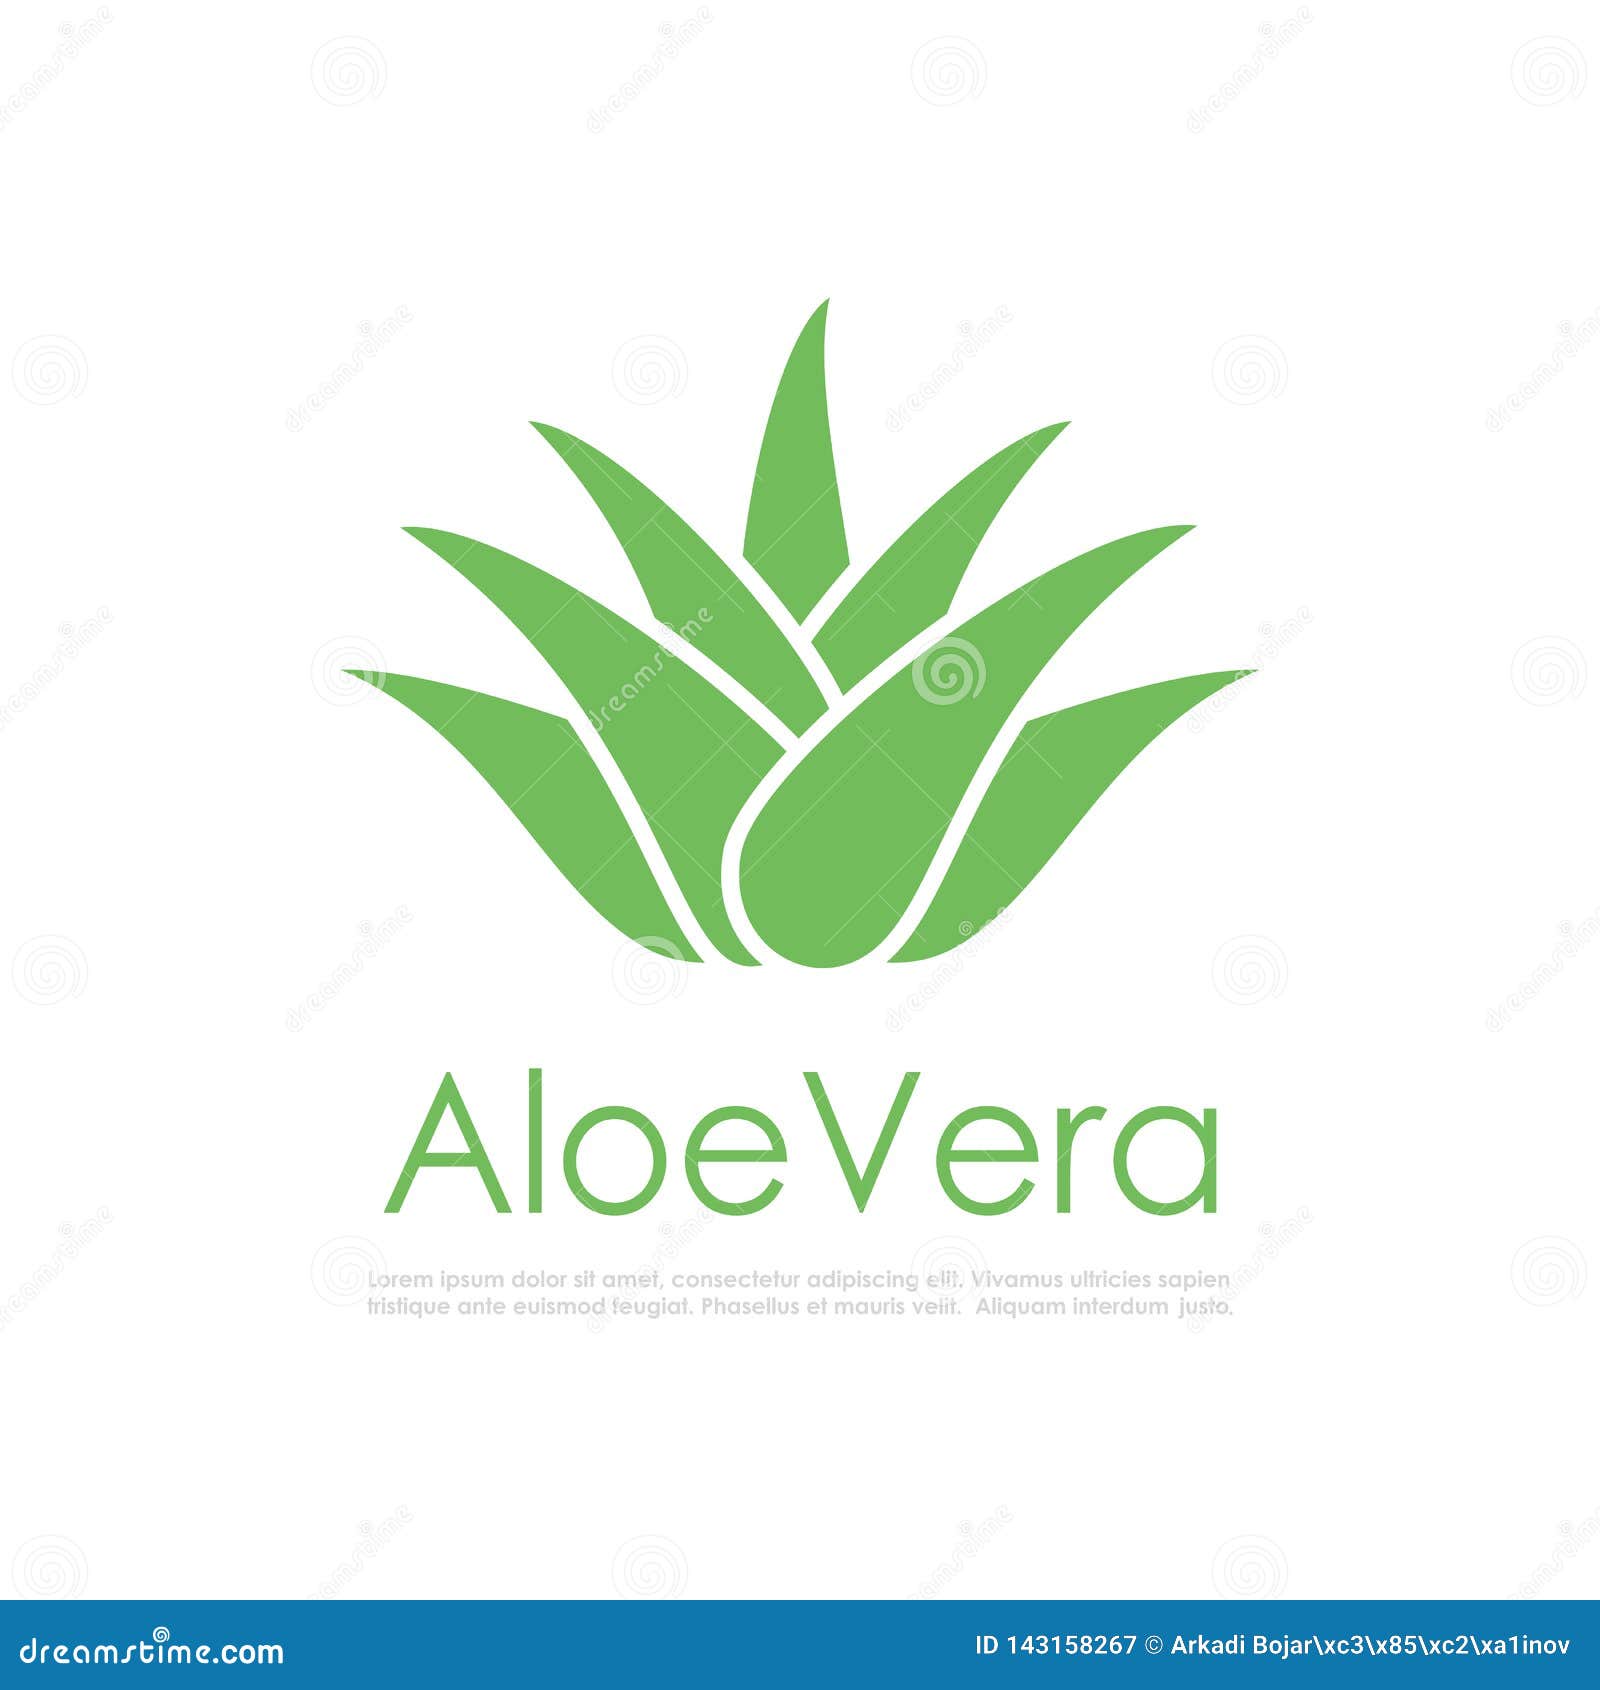 Aloe Vera Logo Vector Organic Fresh Beauty Vector, Organic, Fresh, Beauty  PNG and Vector with Transparent Background for Free Download